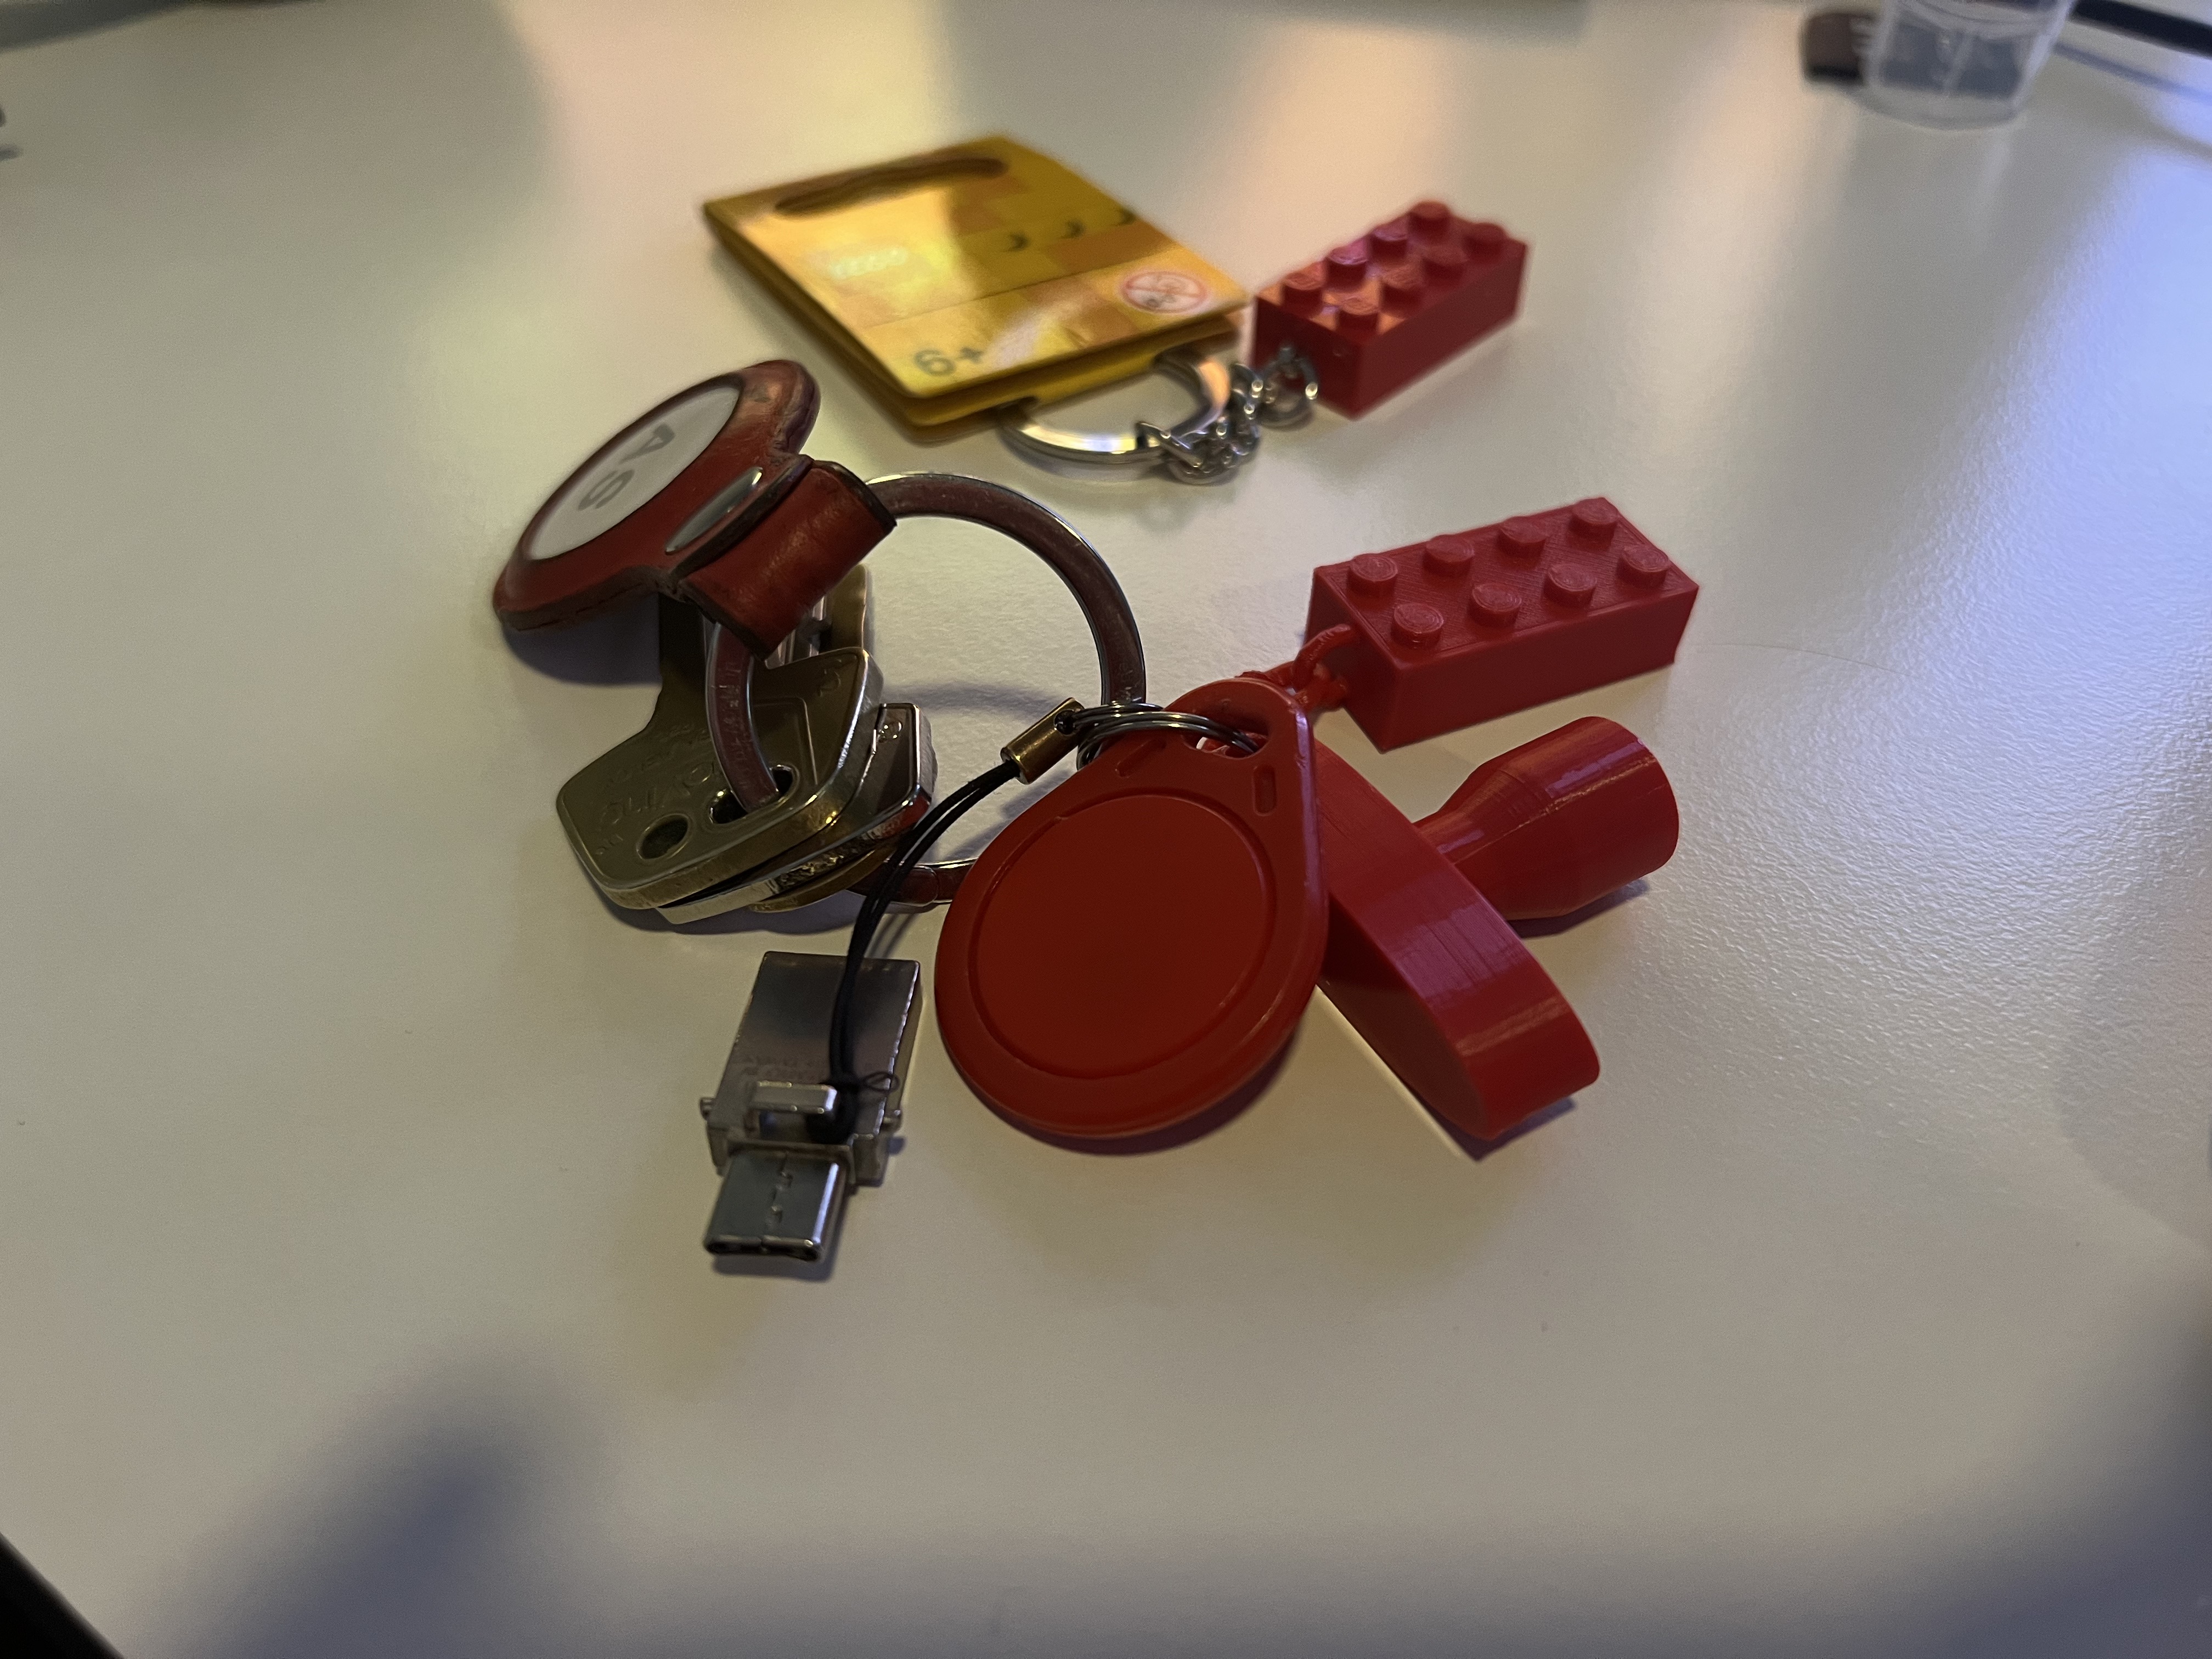 Lego-compatible keychain